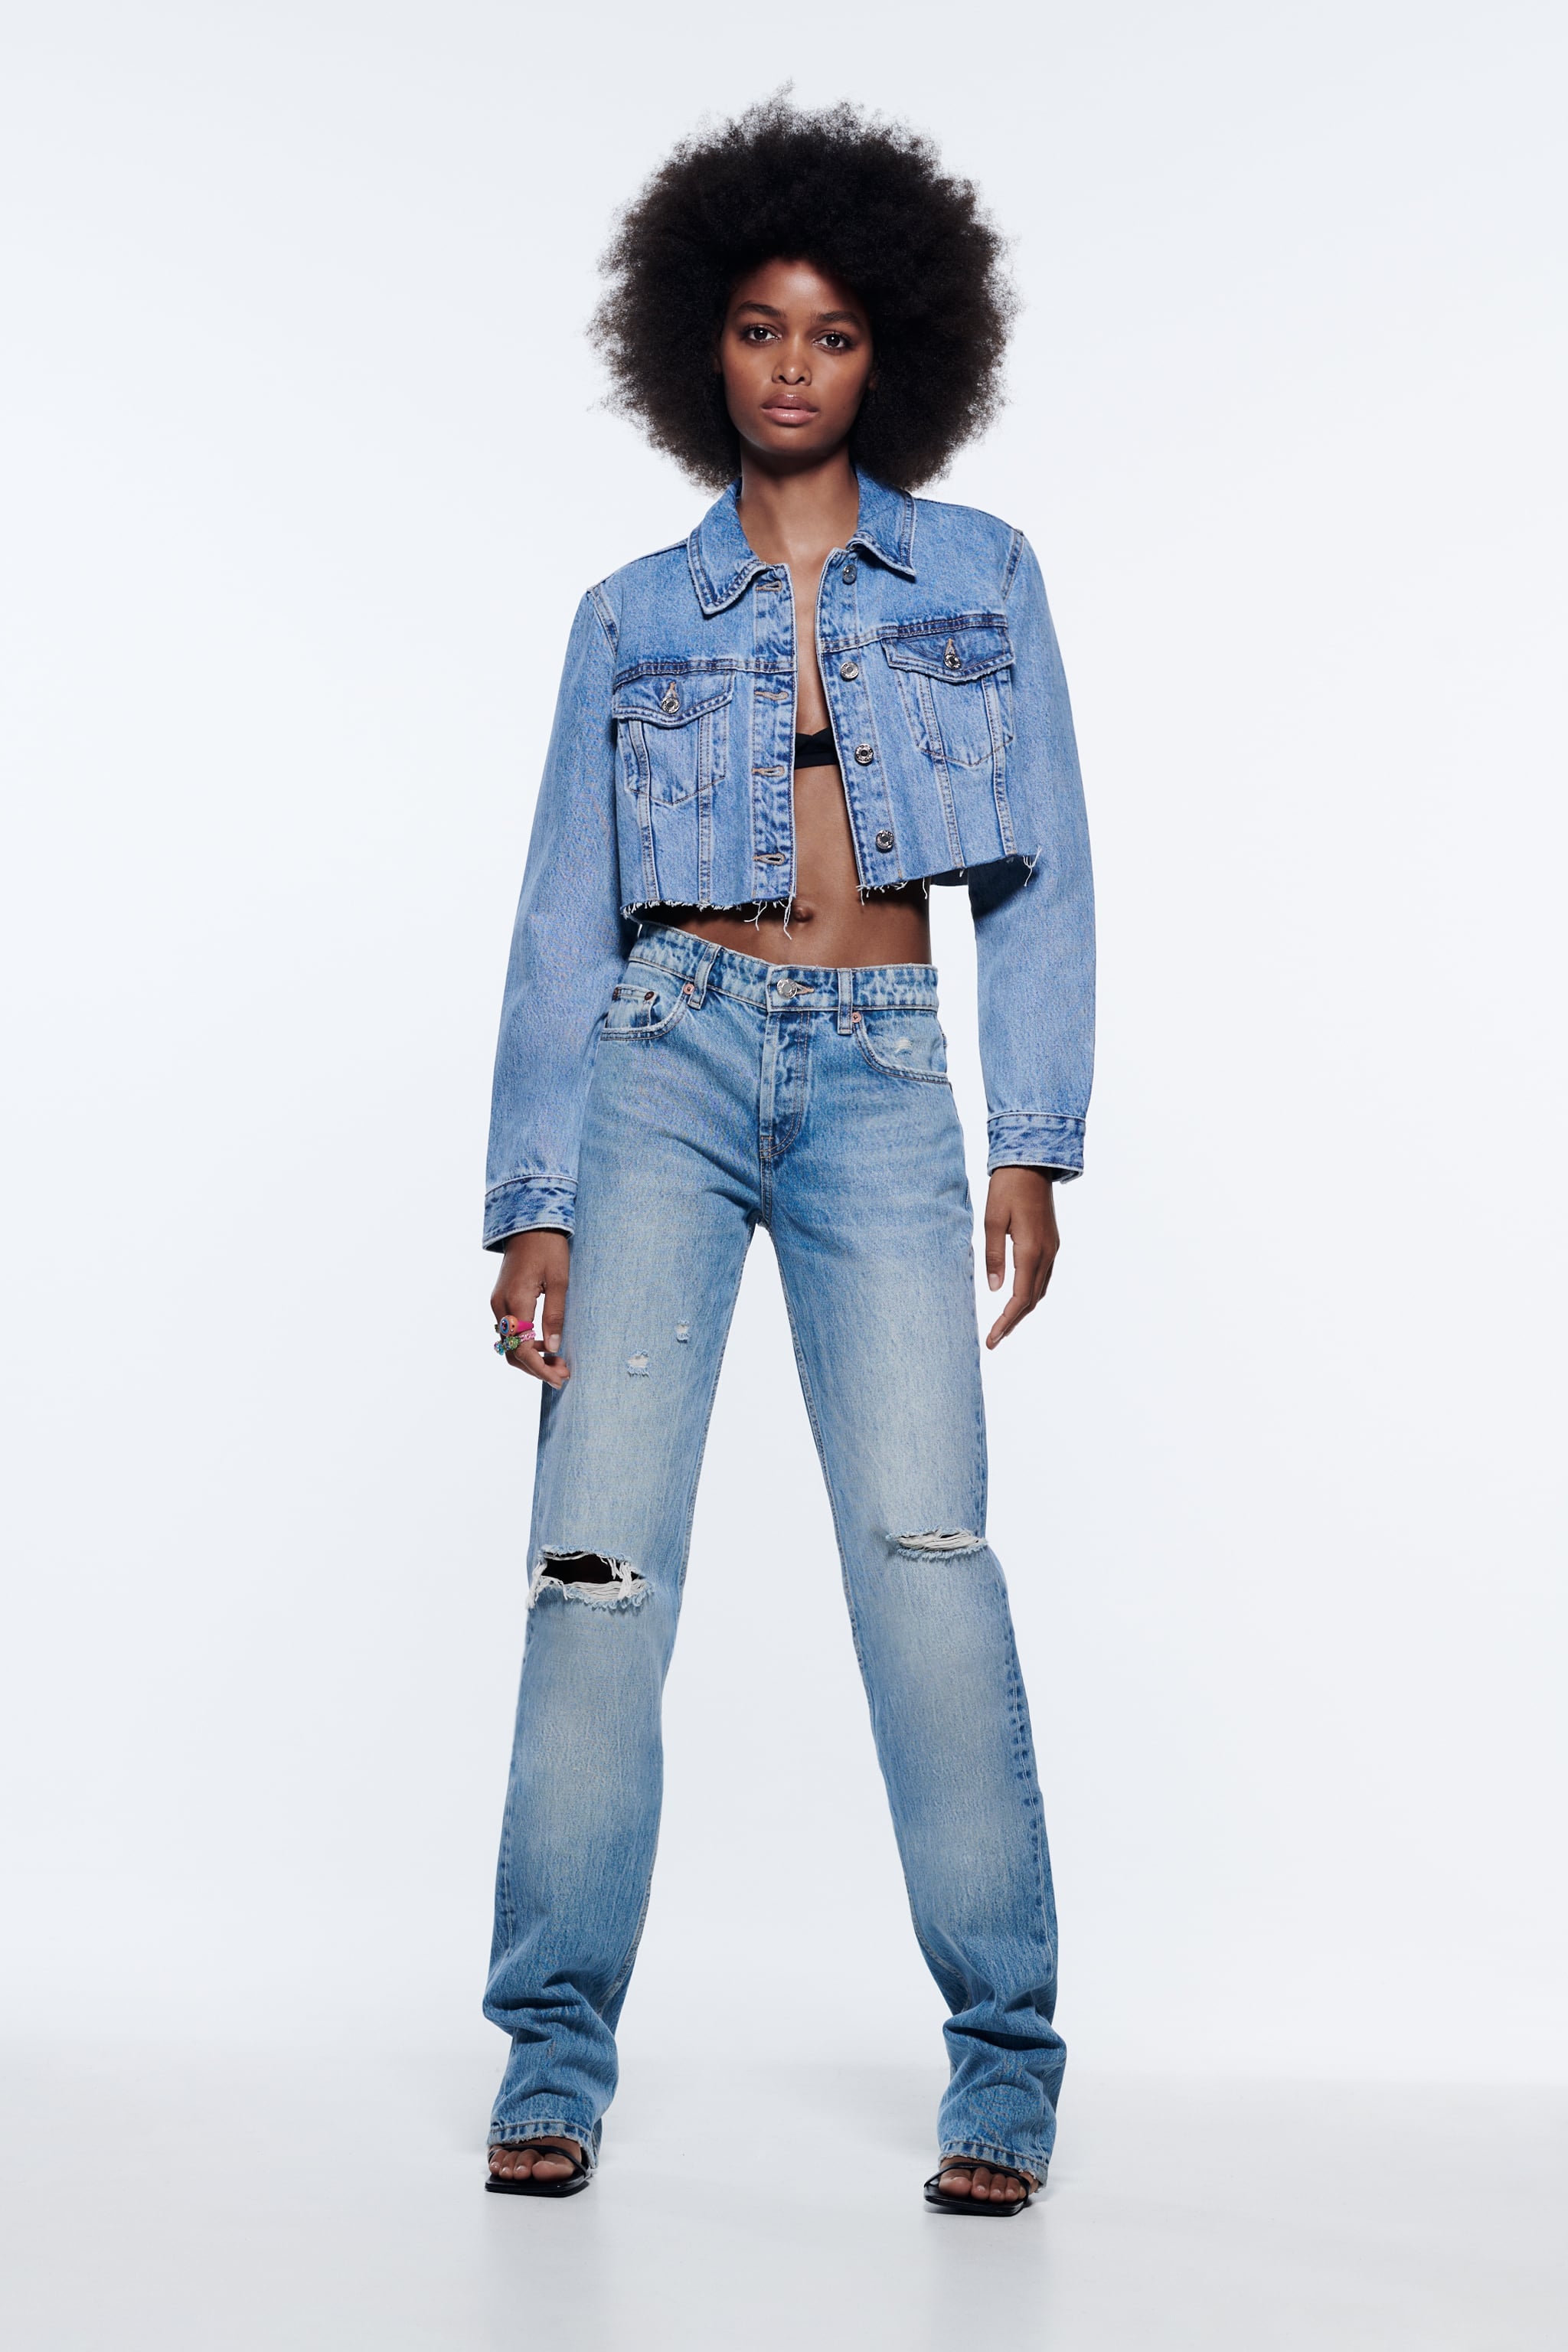 Zara's Cropped Denim Jacket has a similarly unfinished appeal | 9 Ways to Style Your Denim Jacket This Season | POPSUGAR Fashion Photo 13